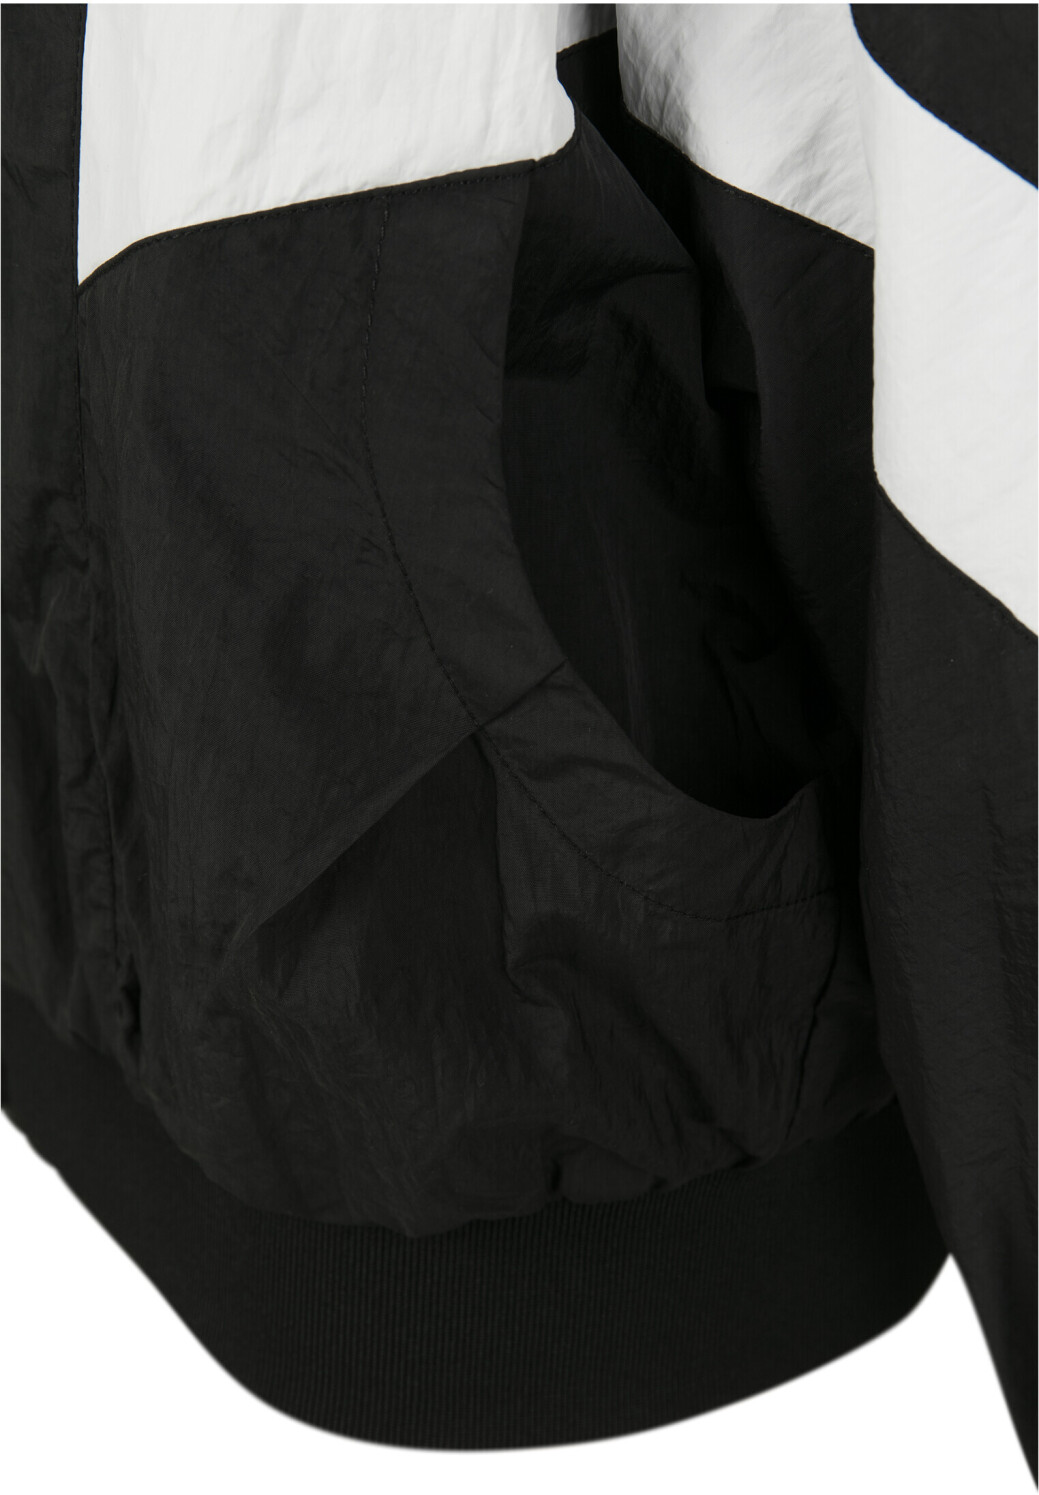 Preisvergleich Batwing Ladies Jacket 32,99 blk/wht Urban Crinkle Classics ab € | (TB2664-00050-0046) bei